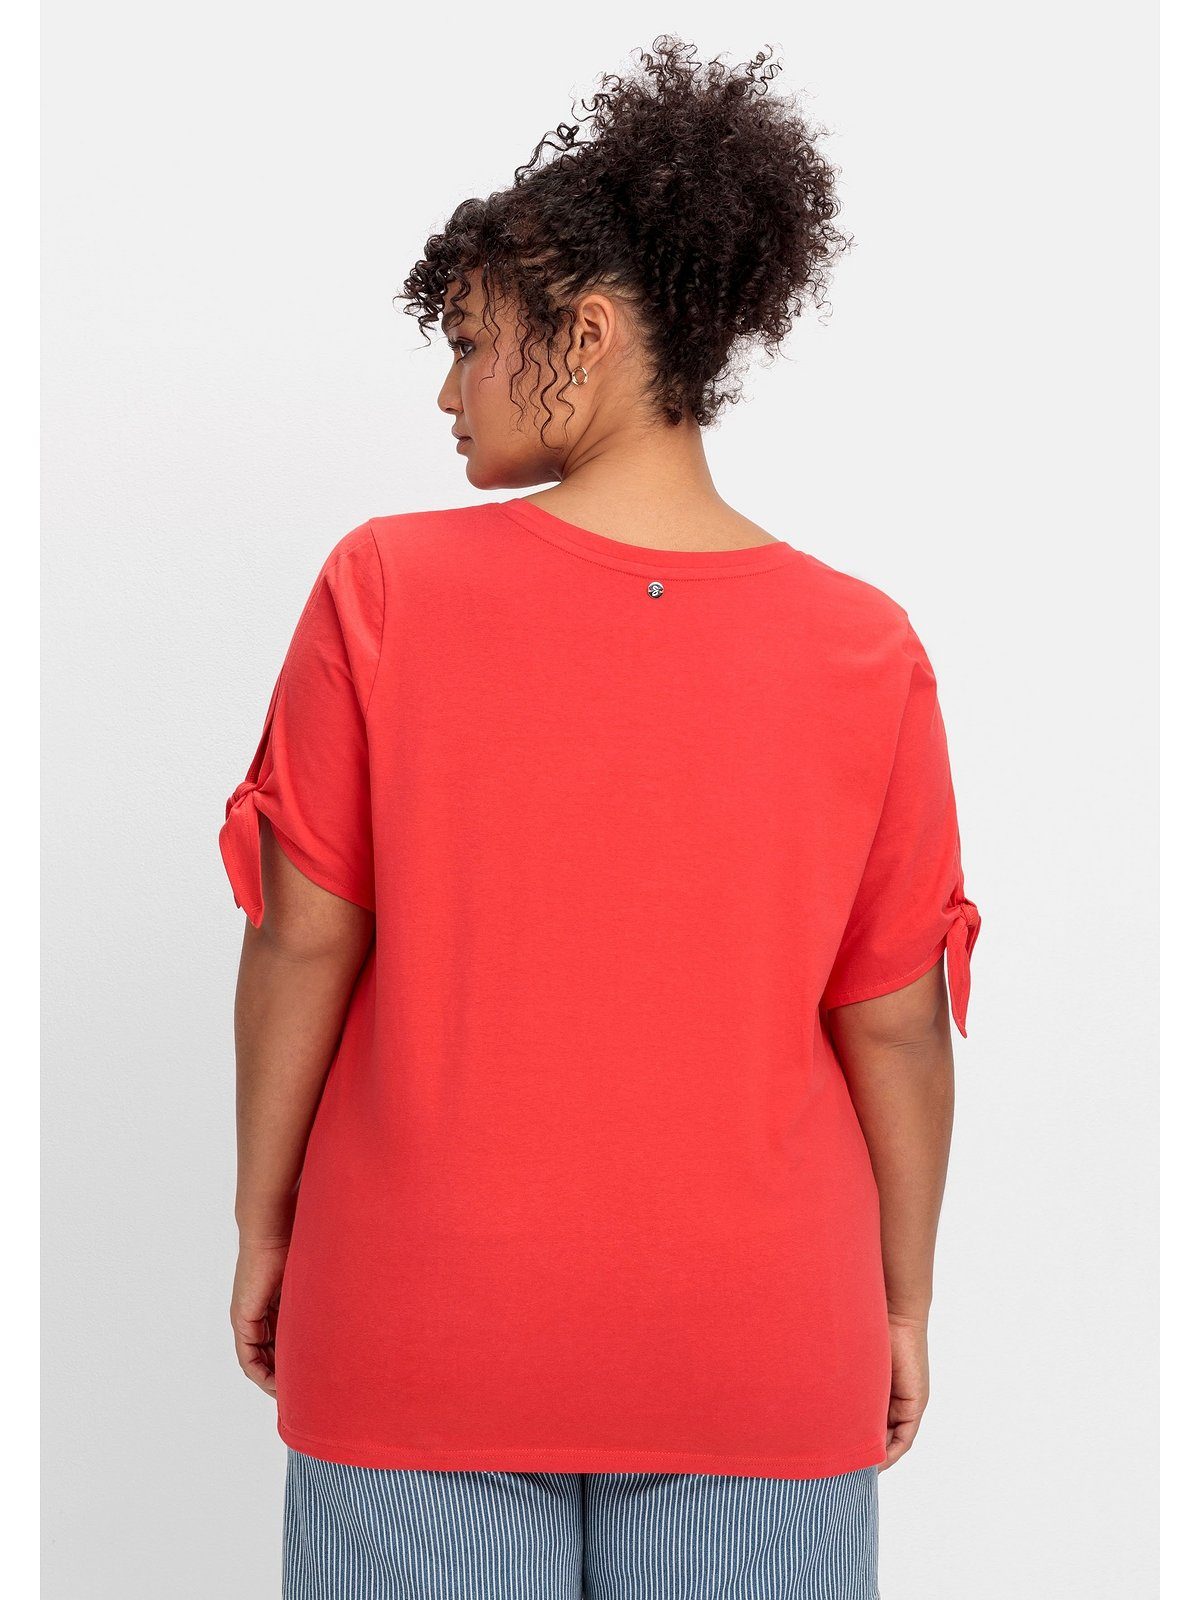 T-Shirt Knotendetail mit Ärmelsaum am Sheego Größen Große rot